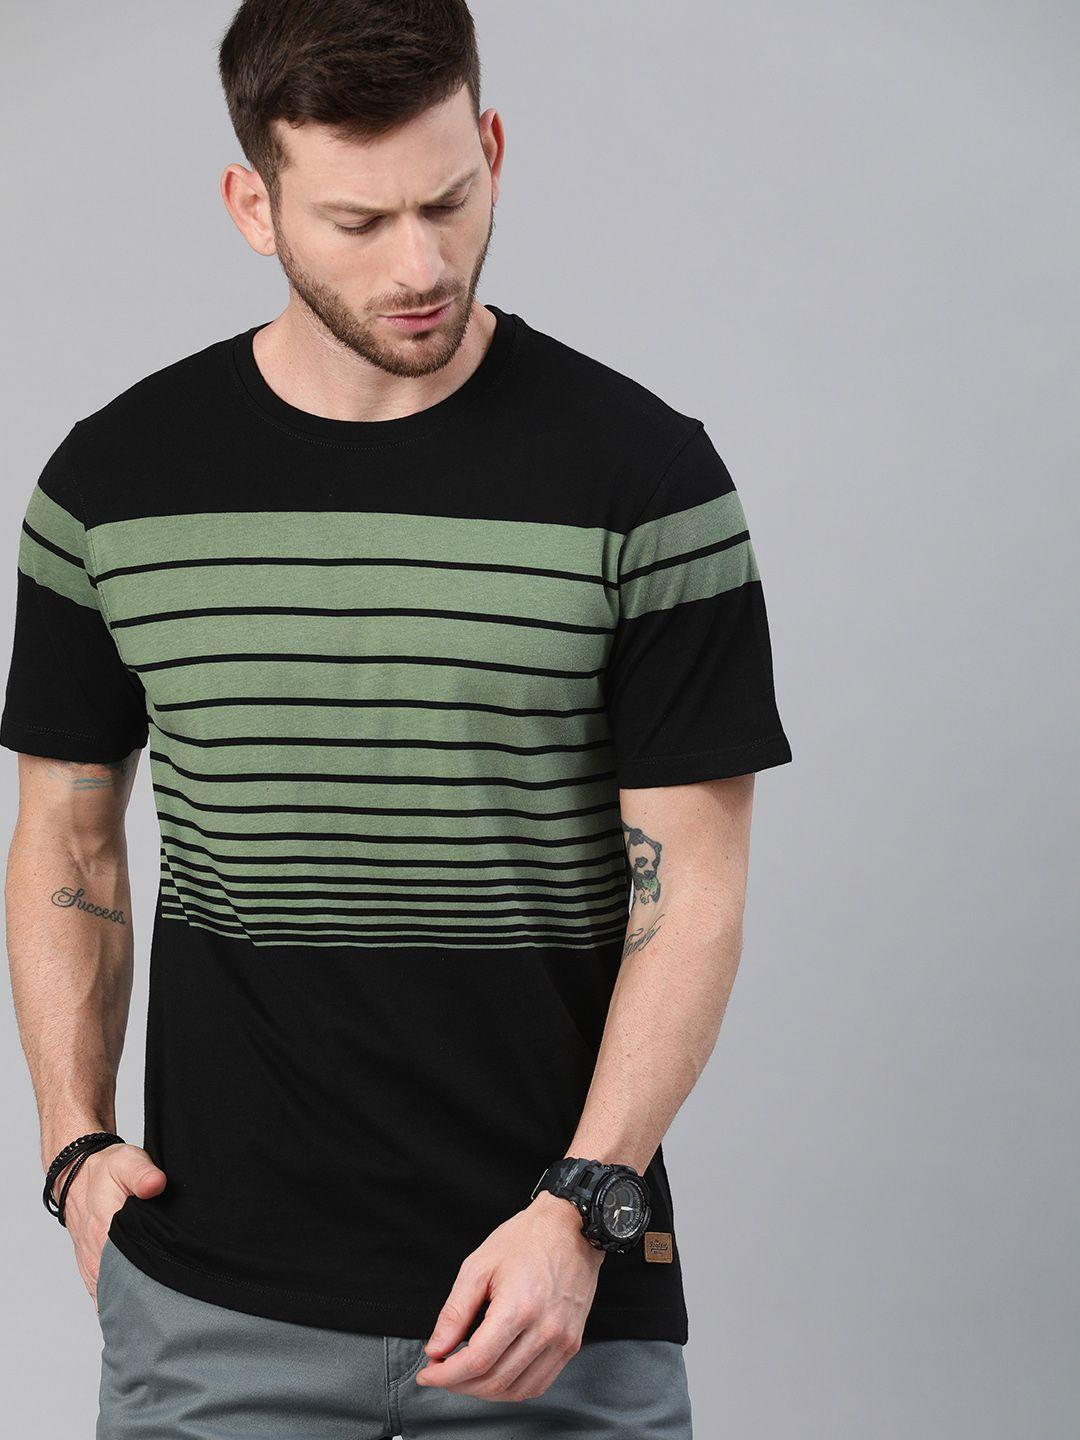 roadster-men-black-&-olive-green-striped-cotton-t-shirt